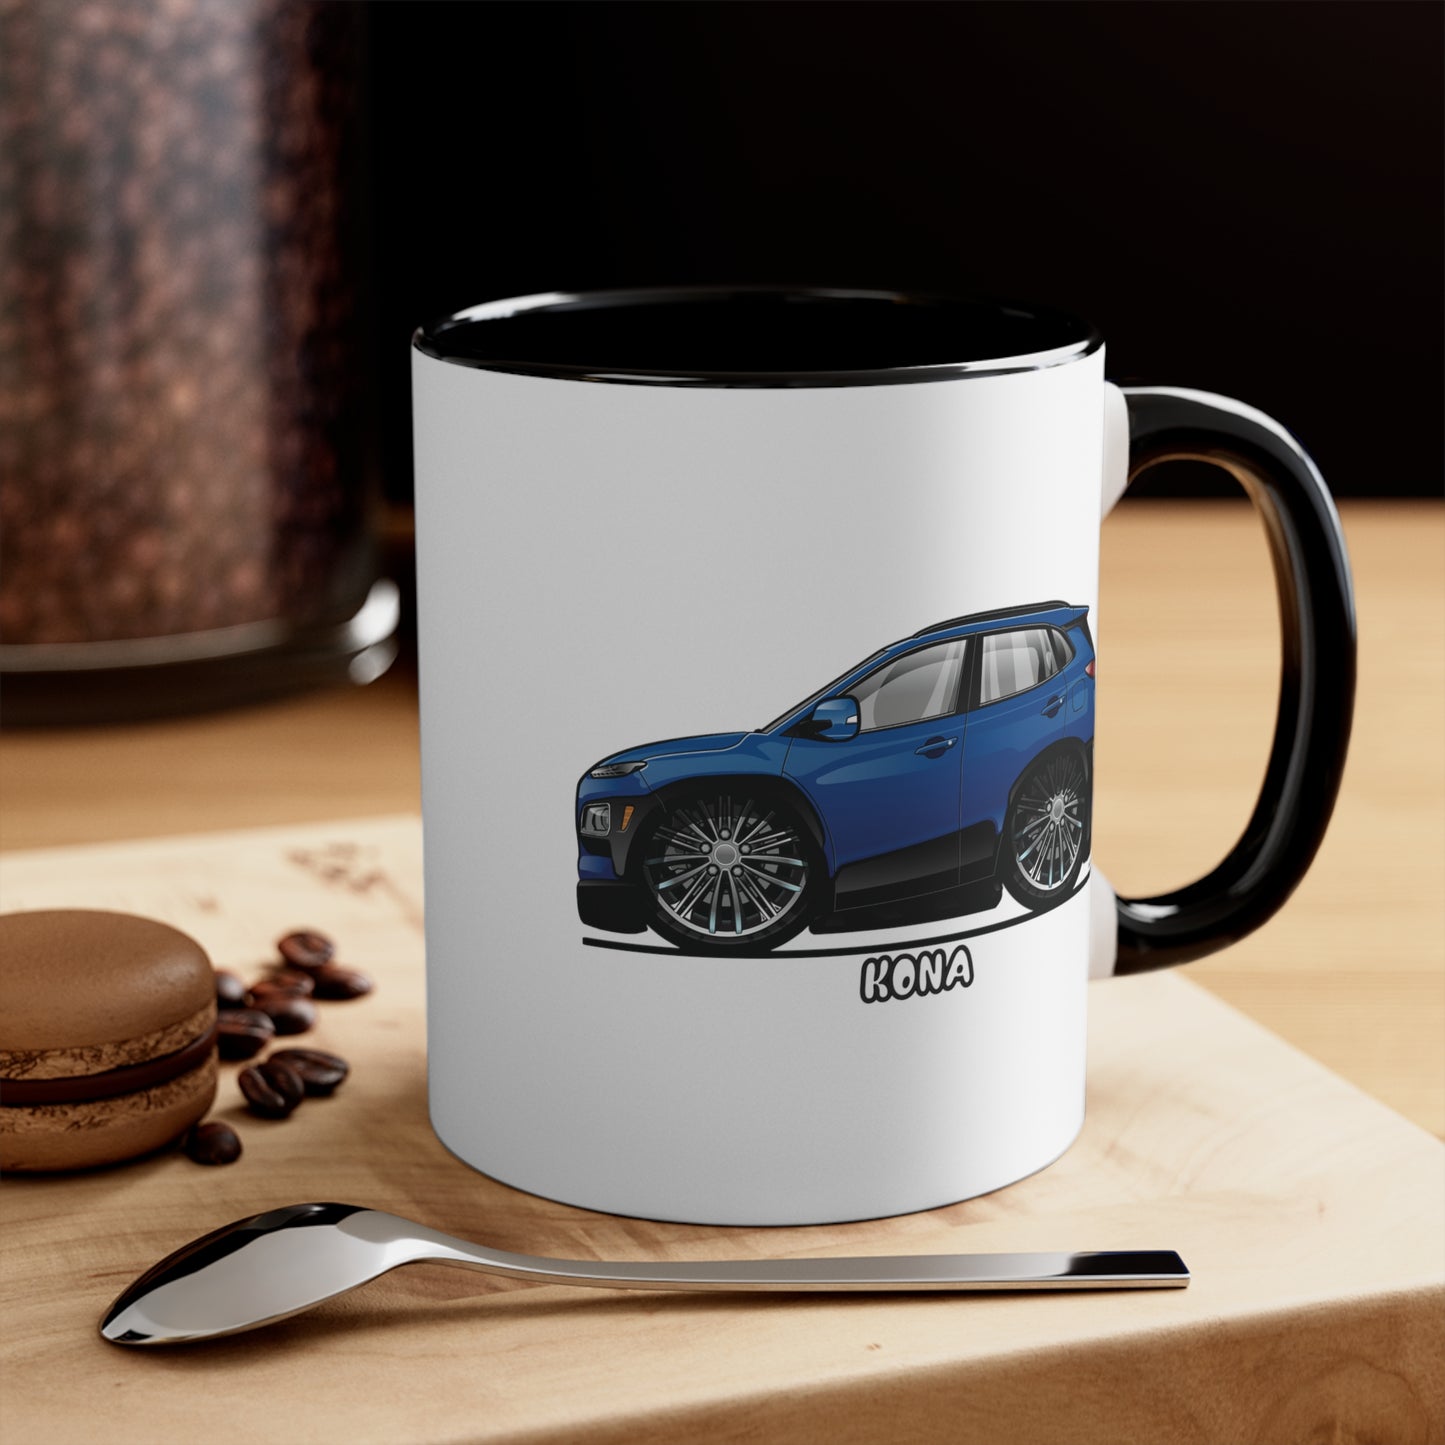 (HYU) Kona New SUV Compact Model DigiRods Cartoon Car Series Set Of 2 Coffee Mugs